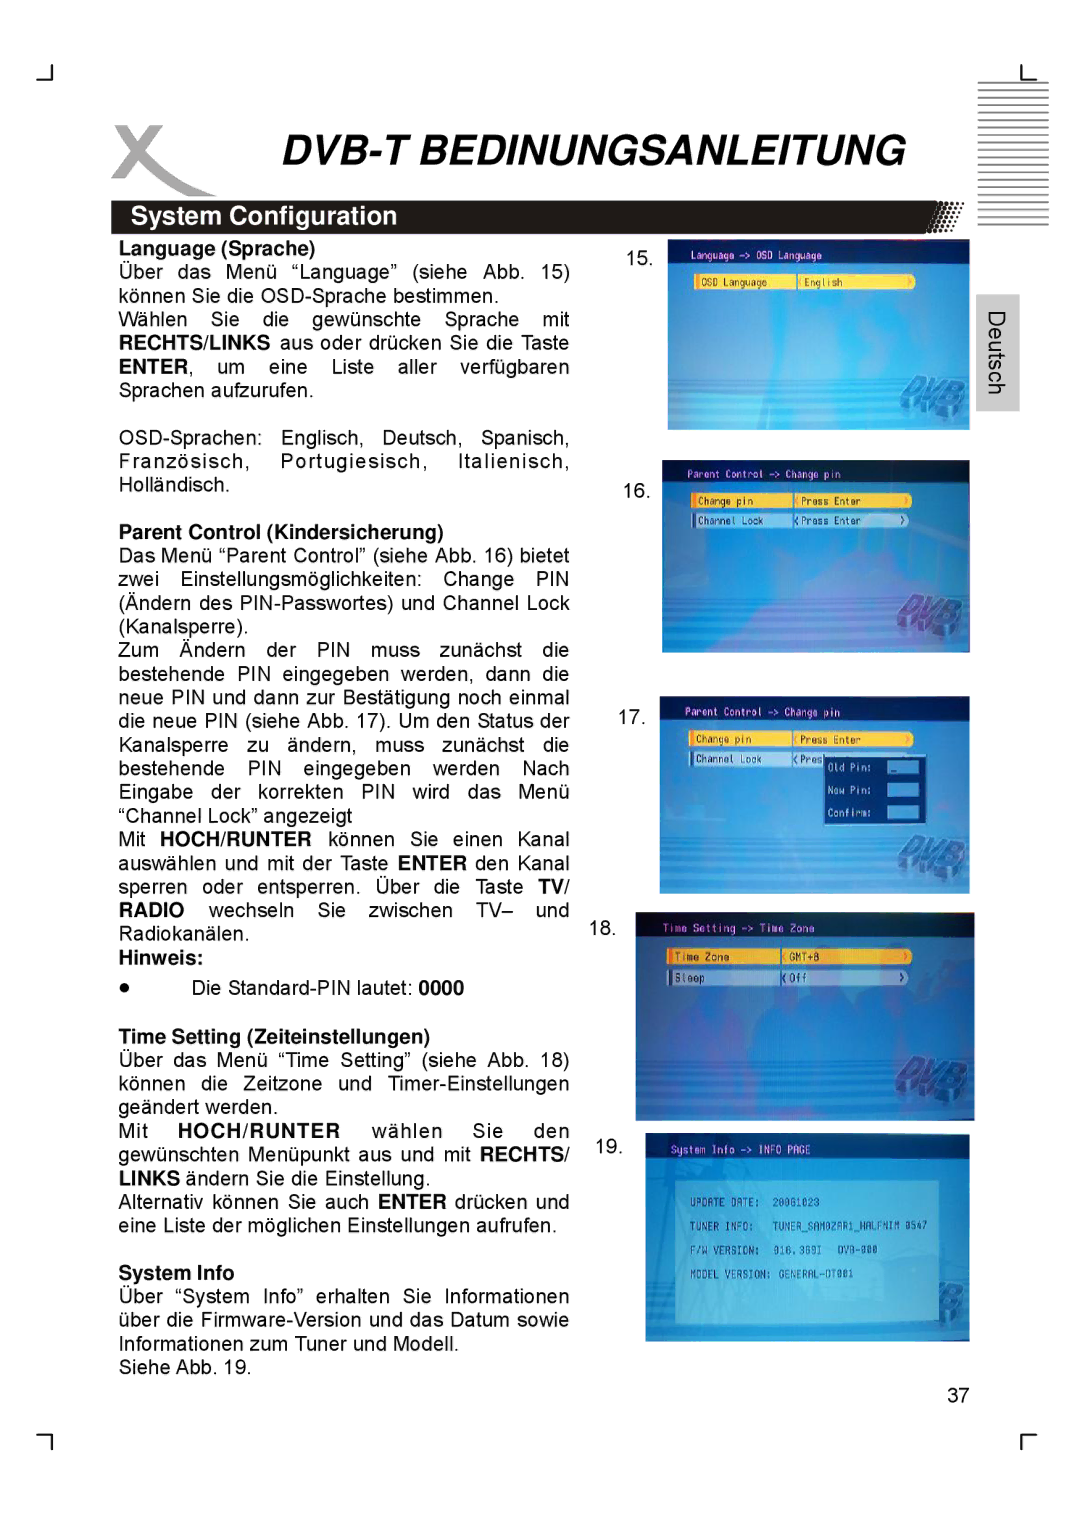 Xoro HTC1900D manual Parent Control Kindersicherung, Time Setting Zeiteinstellungen, System Info 